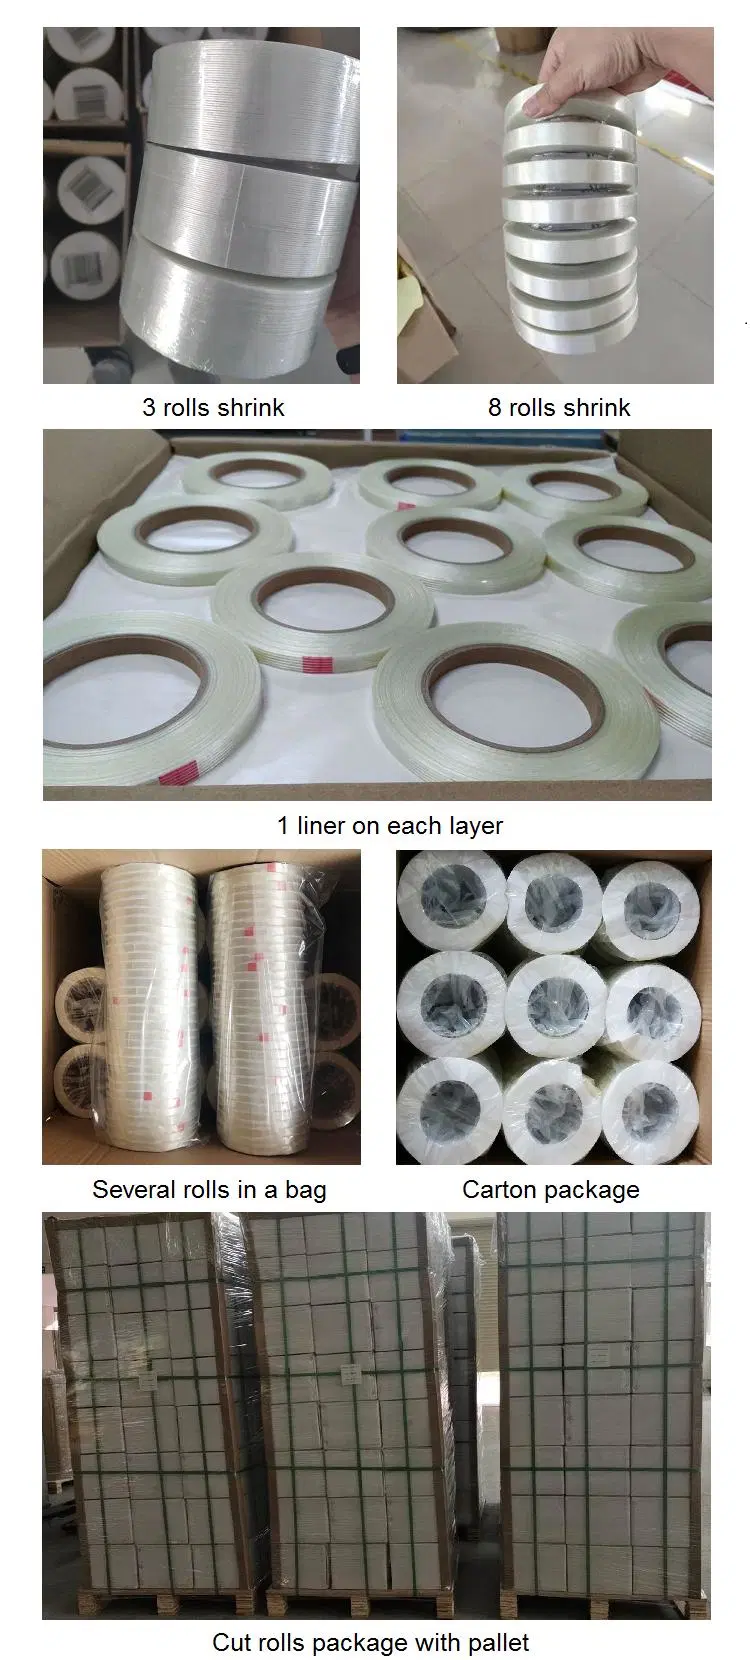 Fiberglass Adhesive Filament Tape Fold Over Edge Elastic Furniture Binding Strapping Sealing Tape